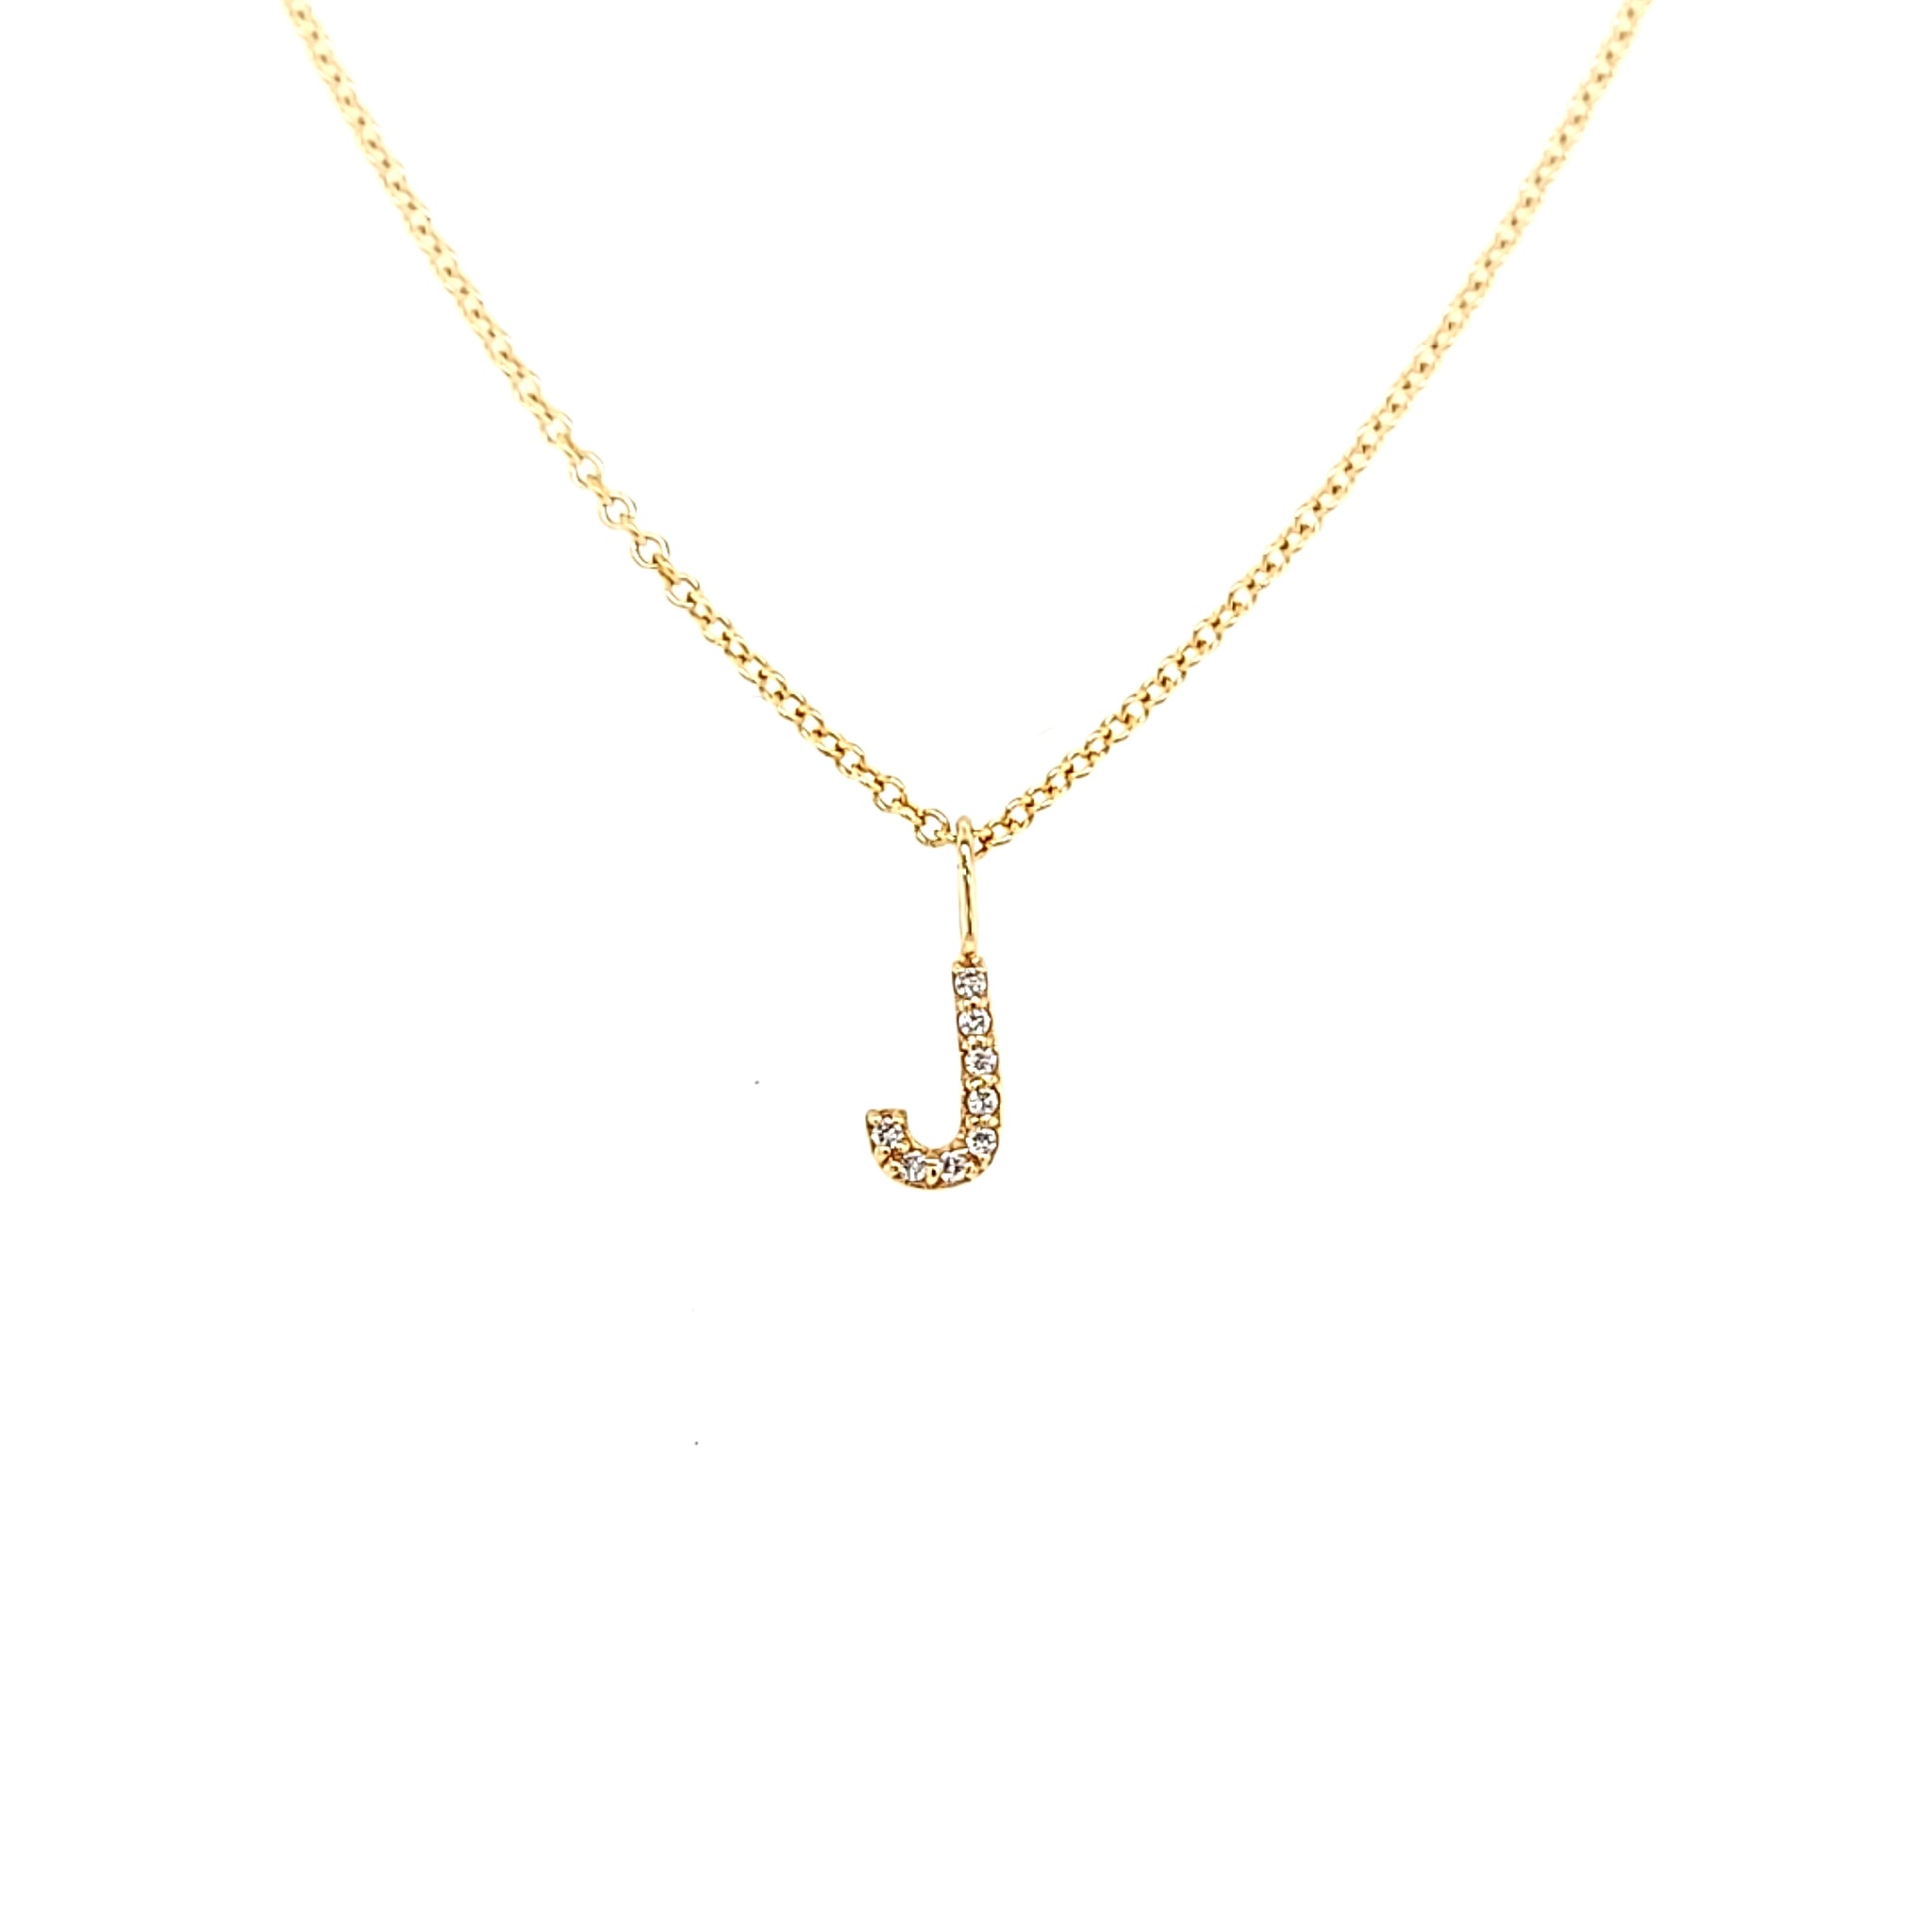 Letter J Pendant Necklace in Silver | Kendra Scott